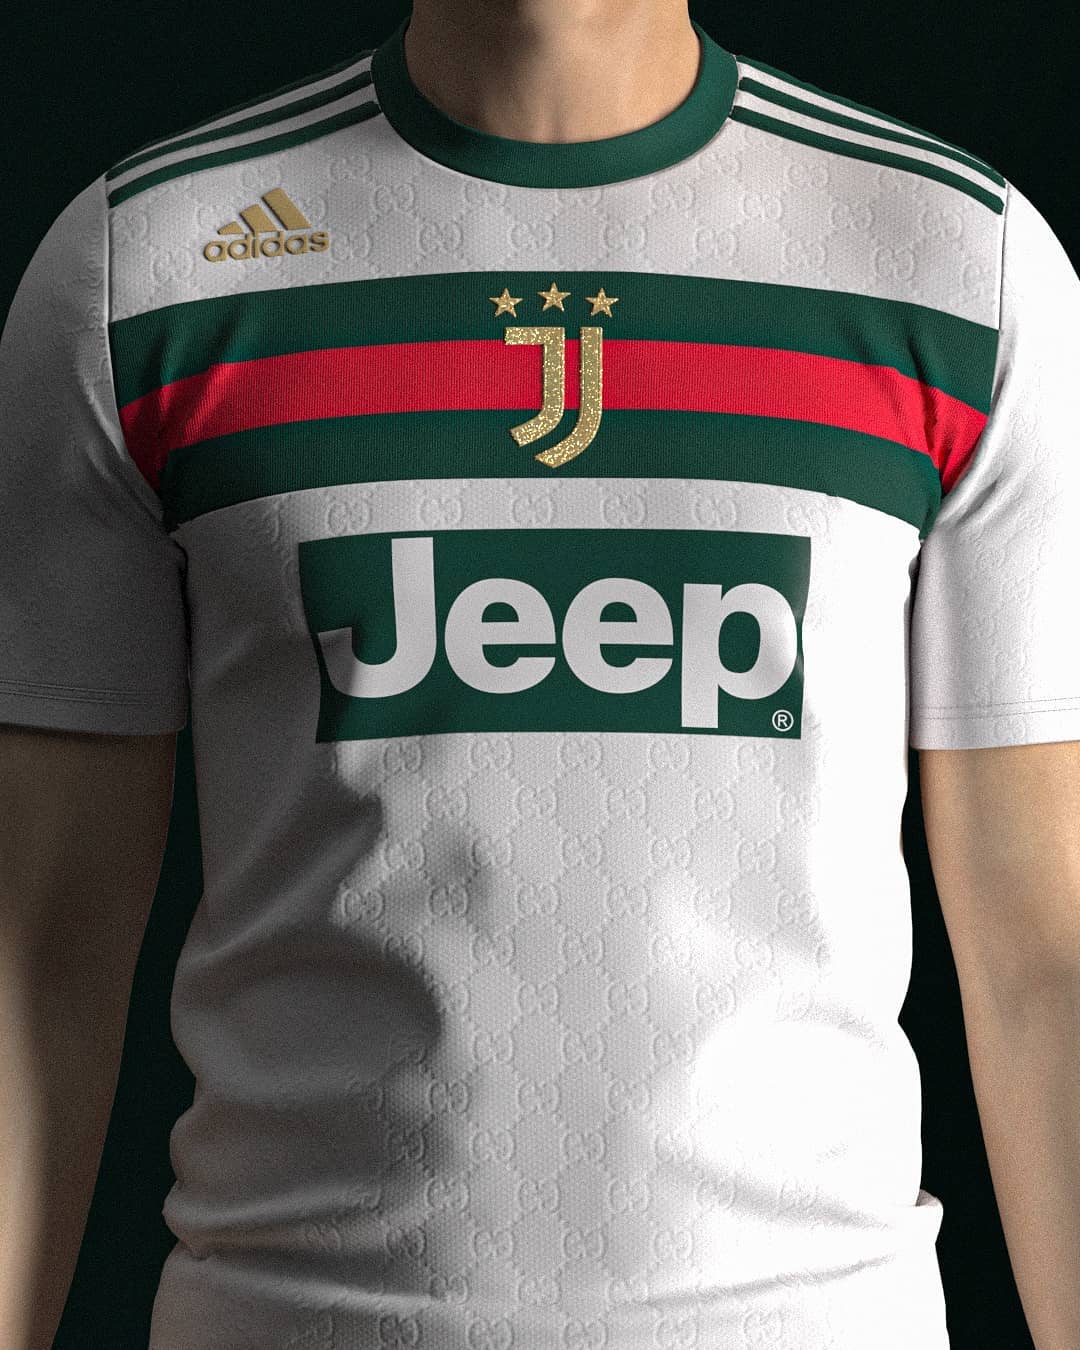 Alvorlig Bestemt dobbeltlag Amazing - Adidas Juventus x Gucci Concept Kit By SETTPACE - Footy Headlines